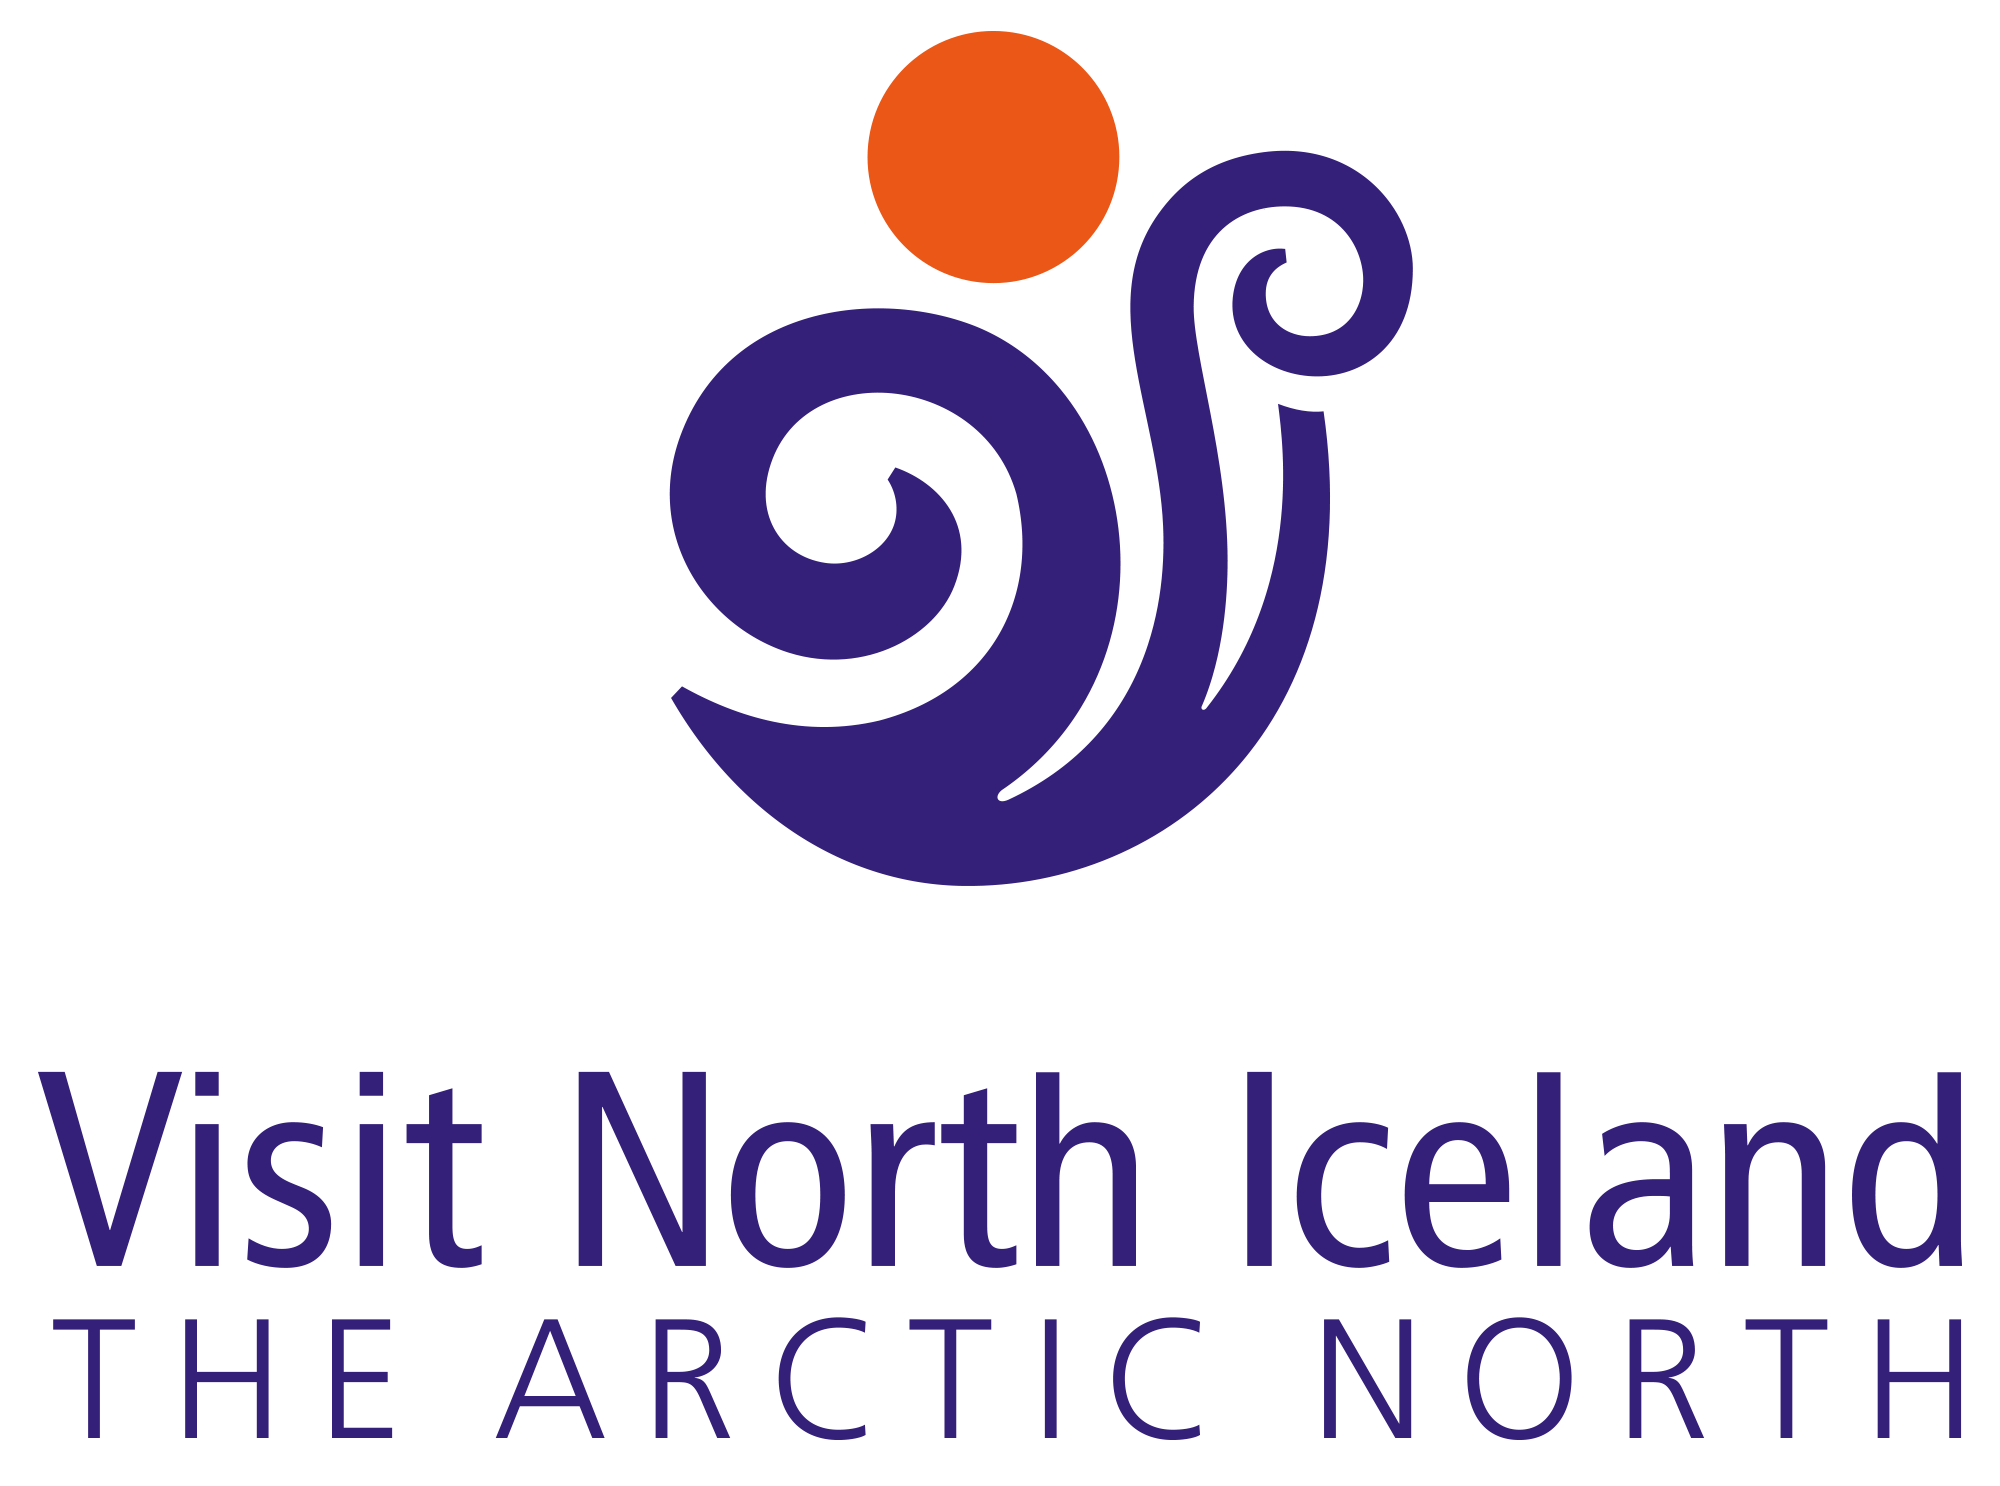 Visit North Iceland